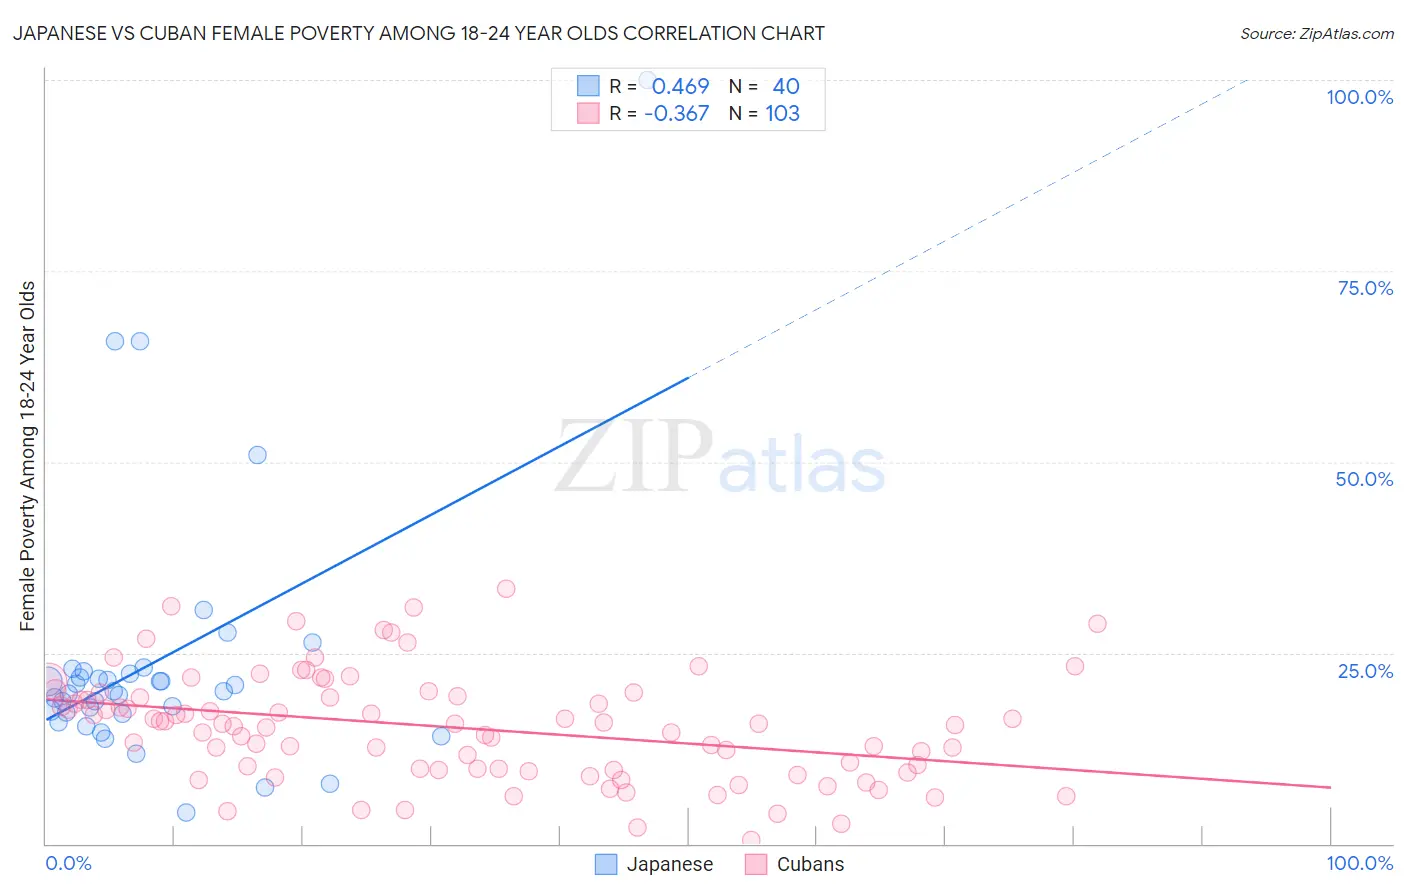 Japanese vs Cuban Female Poverty Among 18-24 Year Olds